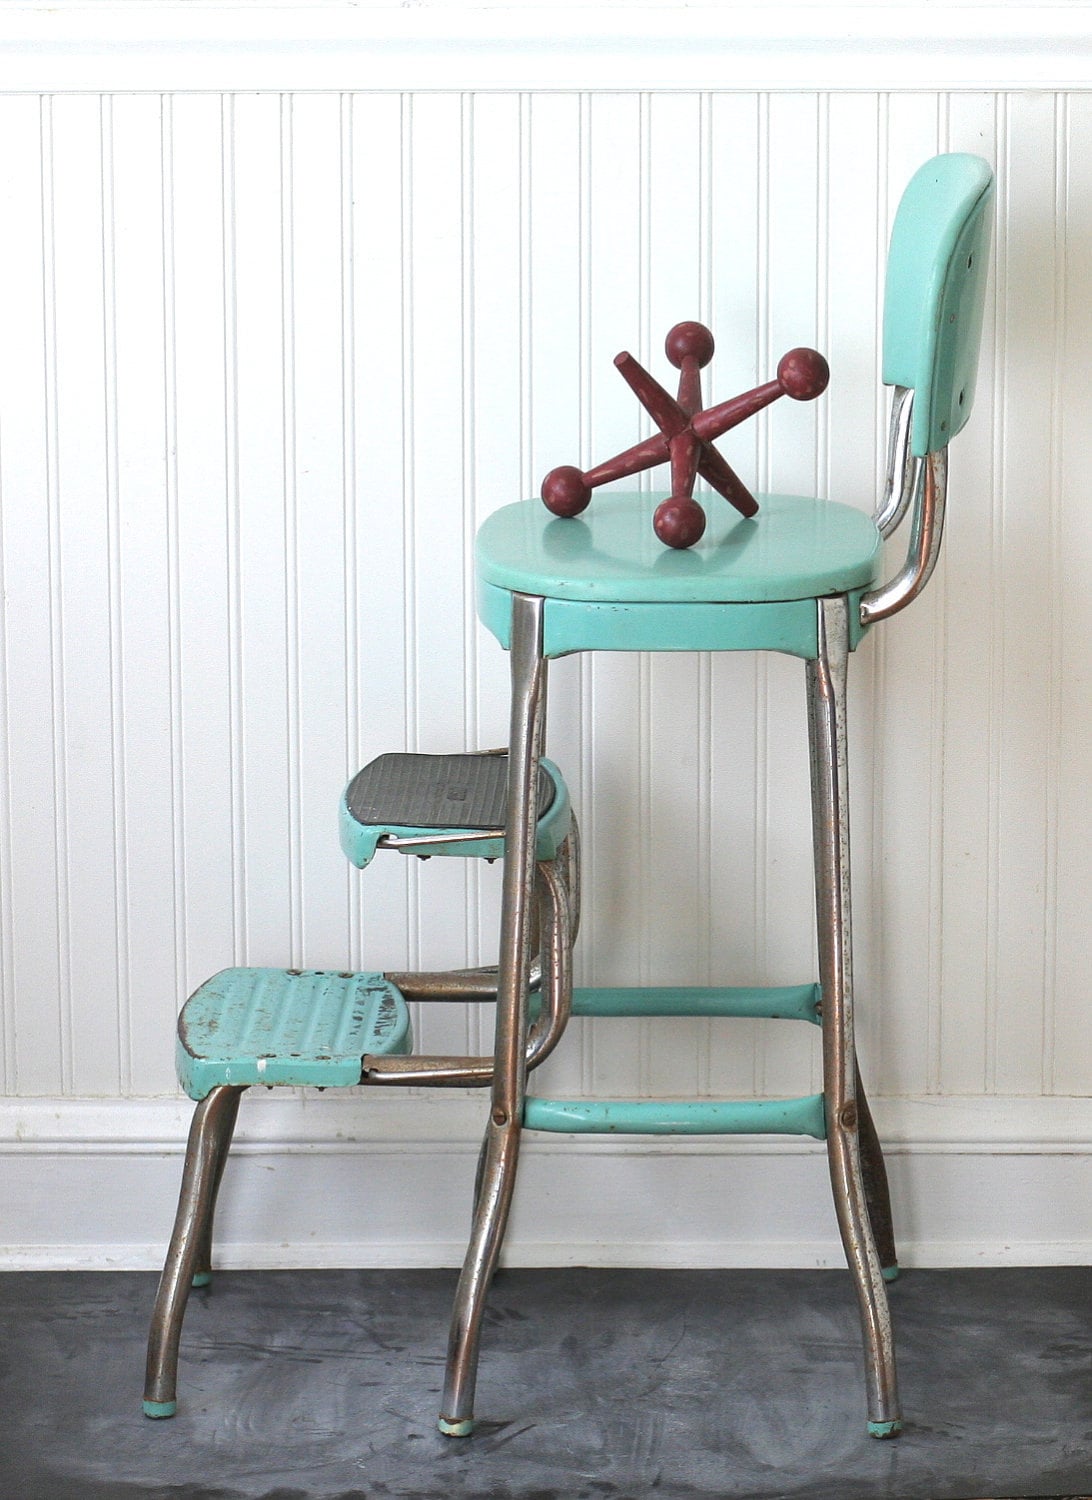 Circa 1950s Cosco Fold Out Step Stool Chair Aqua Turquoise